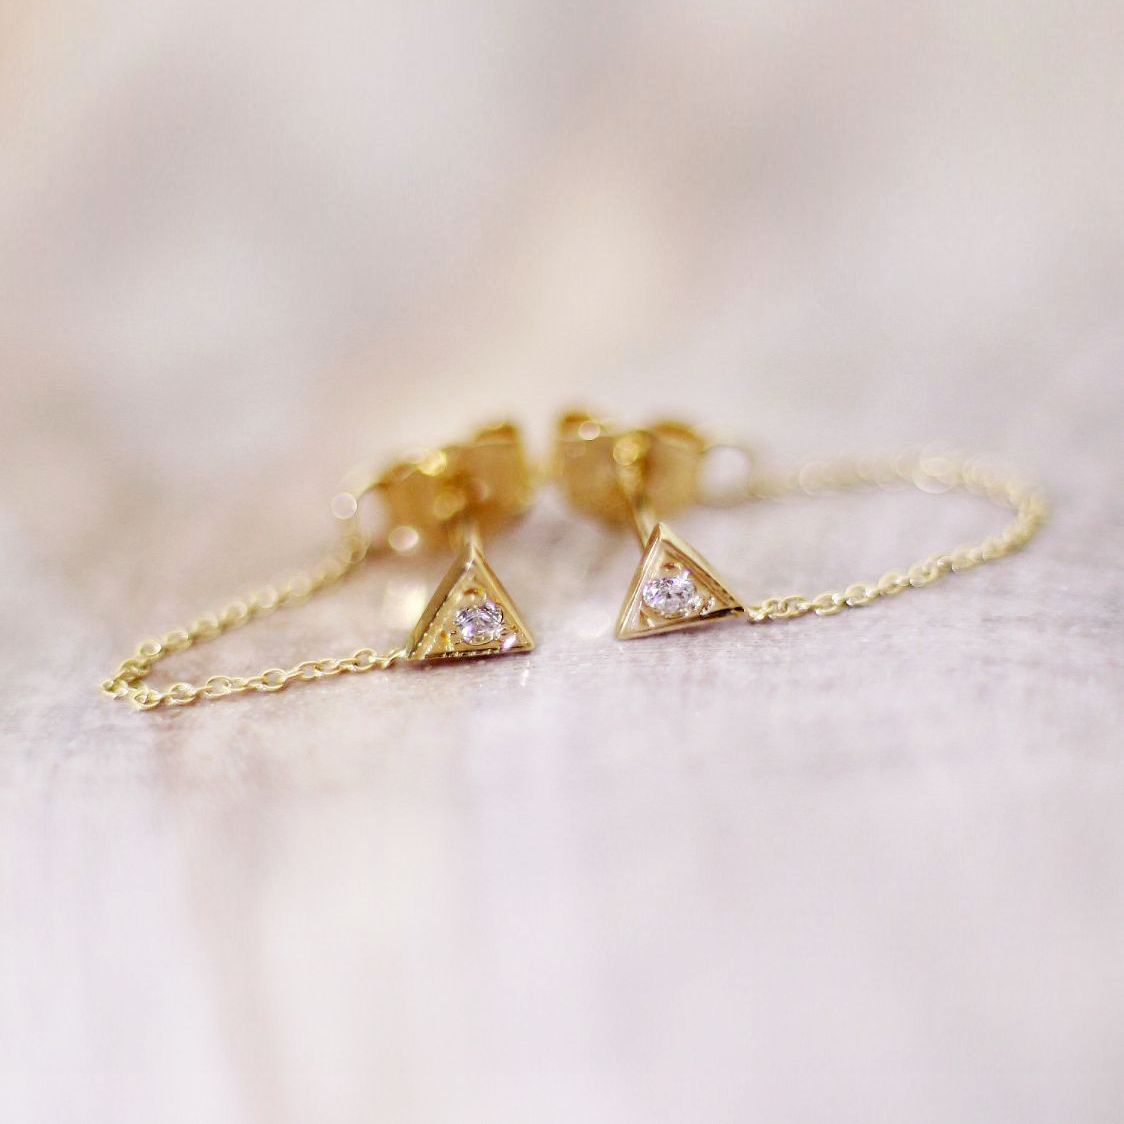 Aili Jewelry | Gaia Diamond + 14k Gold Chain Earrings | Firecracker